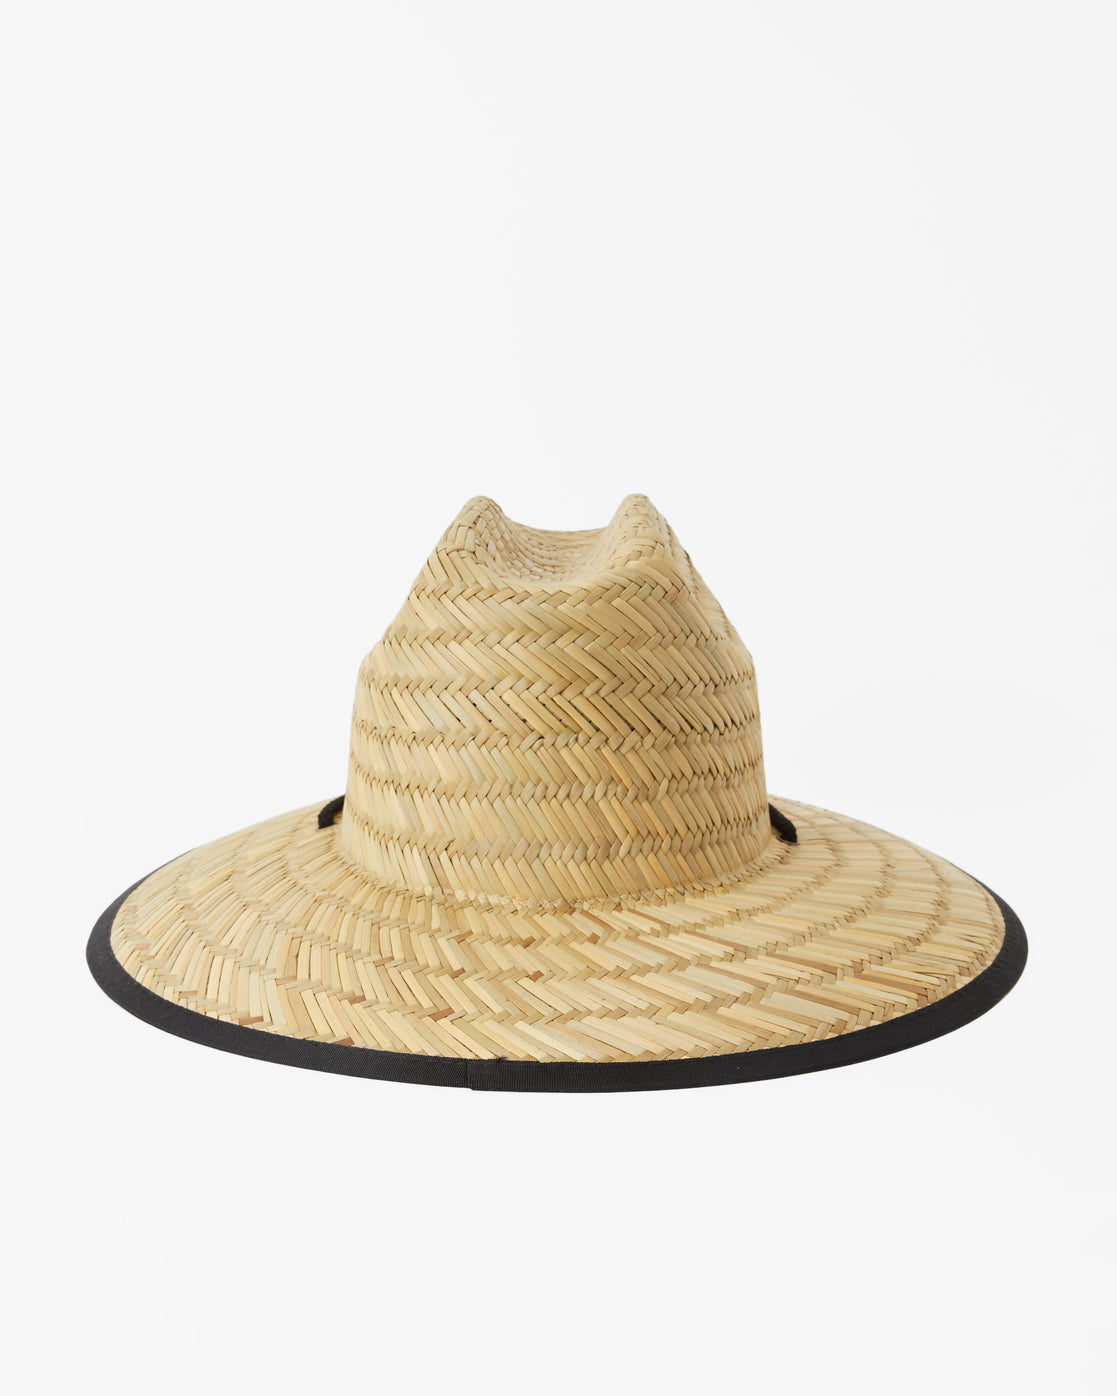 Tipton Straw Lifeguard Hat - Black Sands